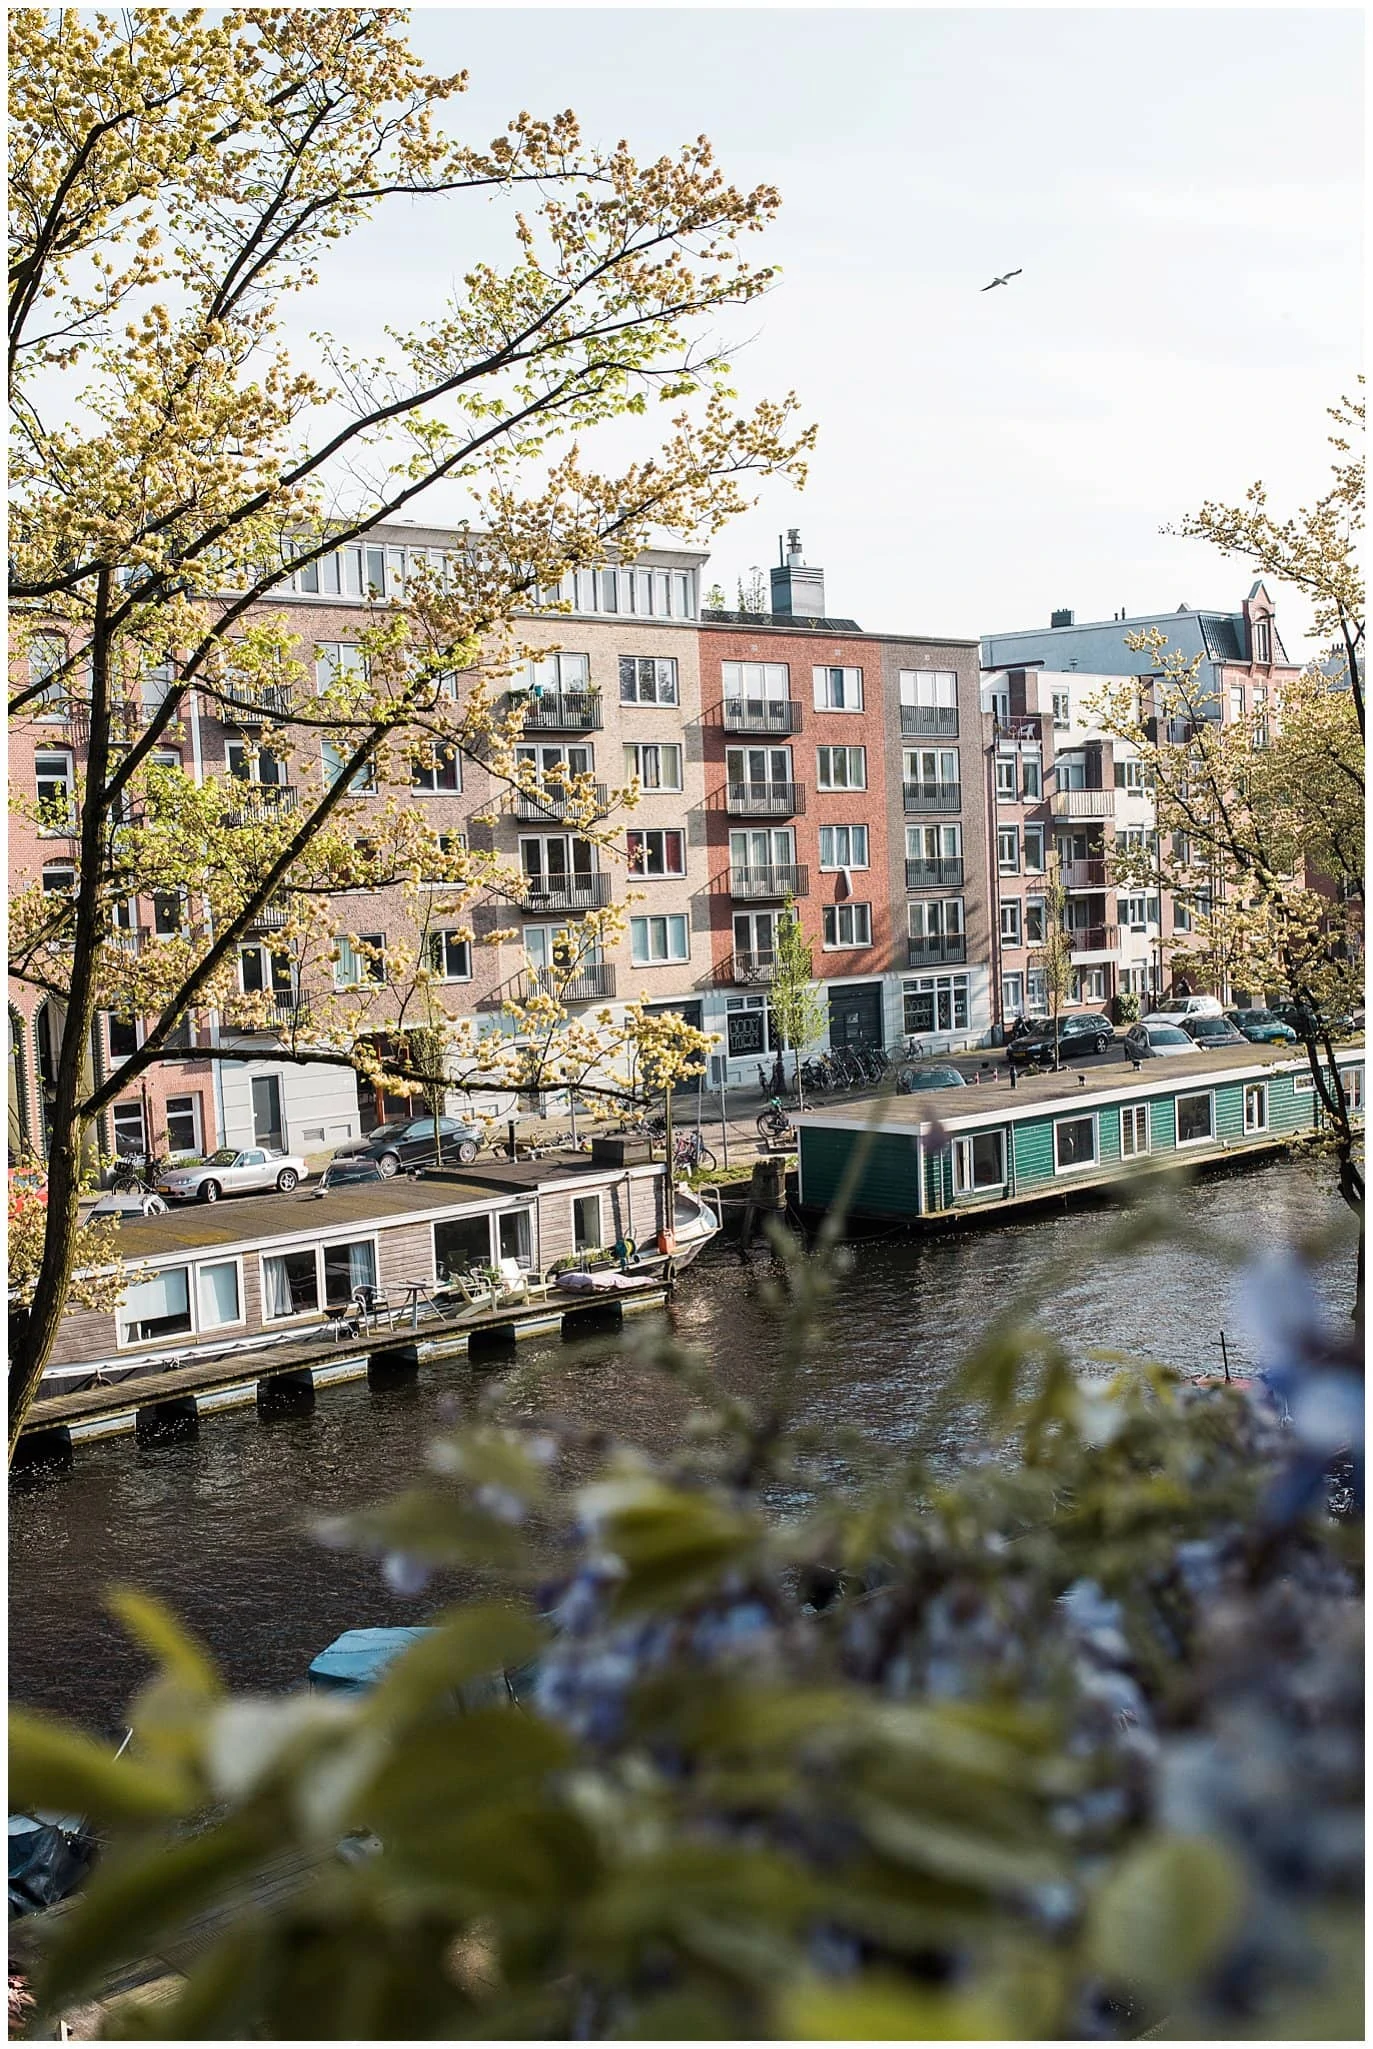 Amsterdam canal photo